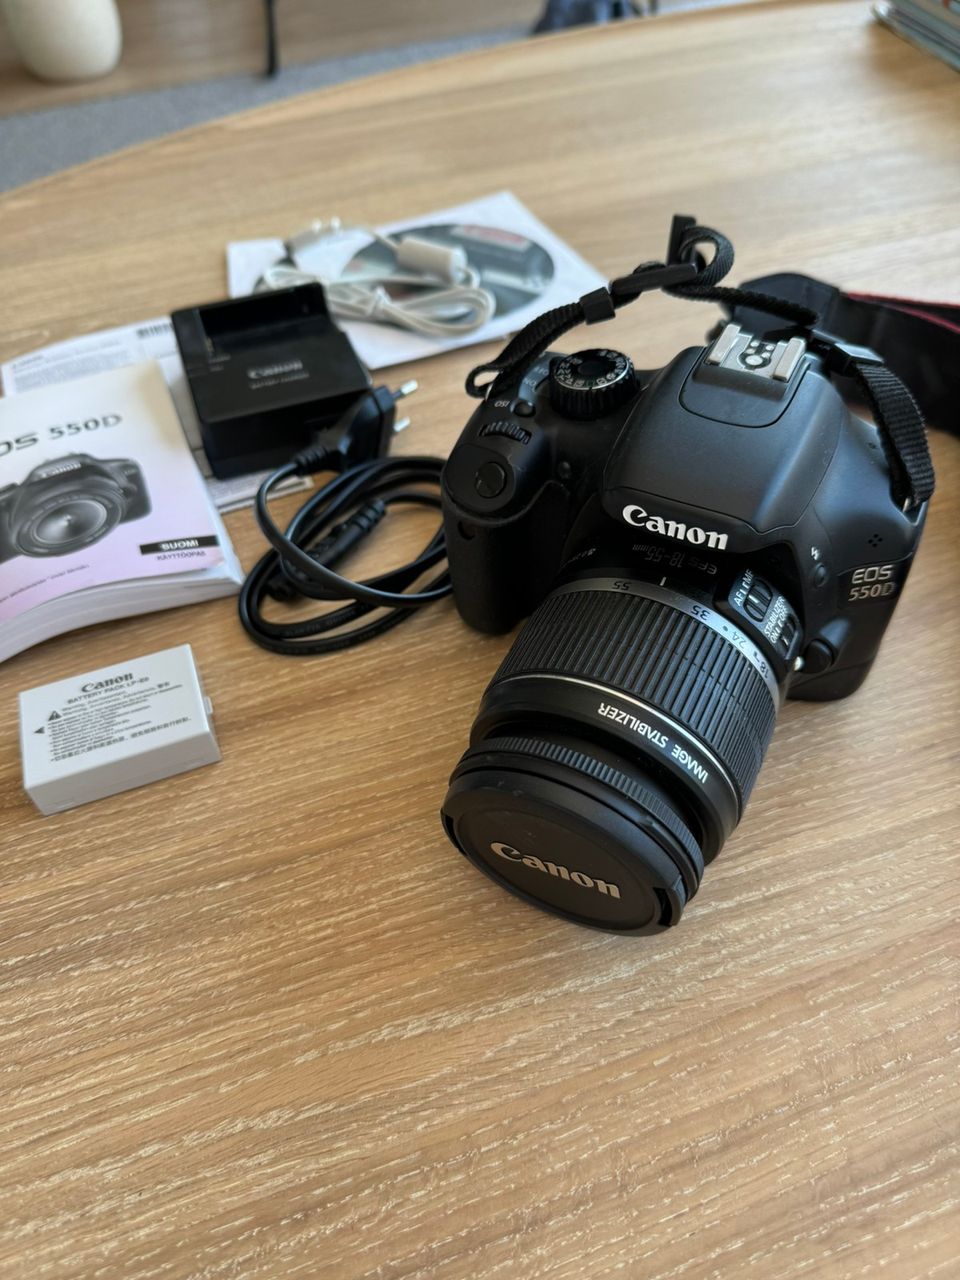 Canon EOS 550D full set